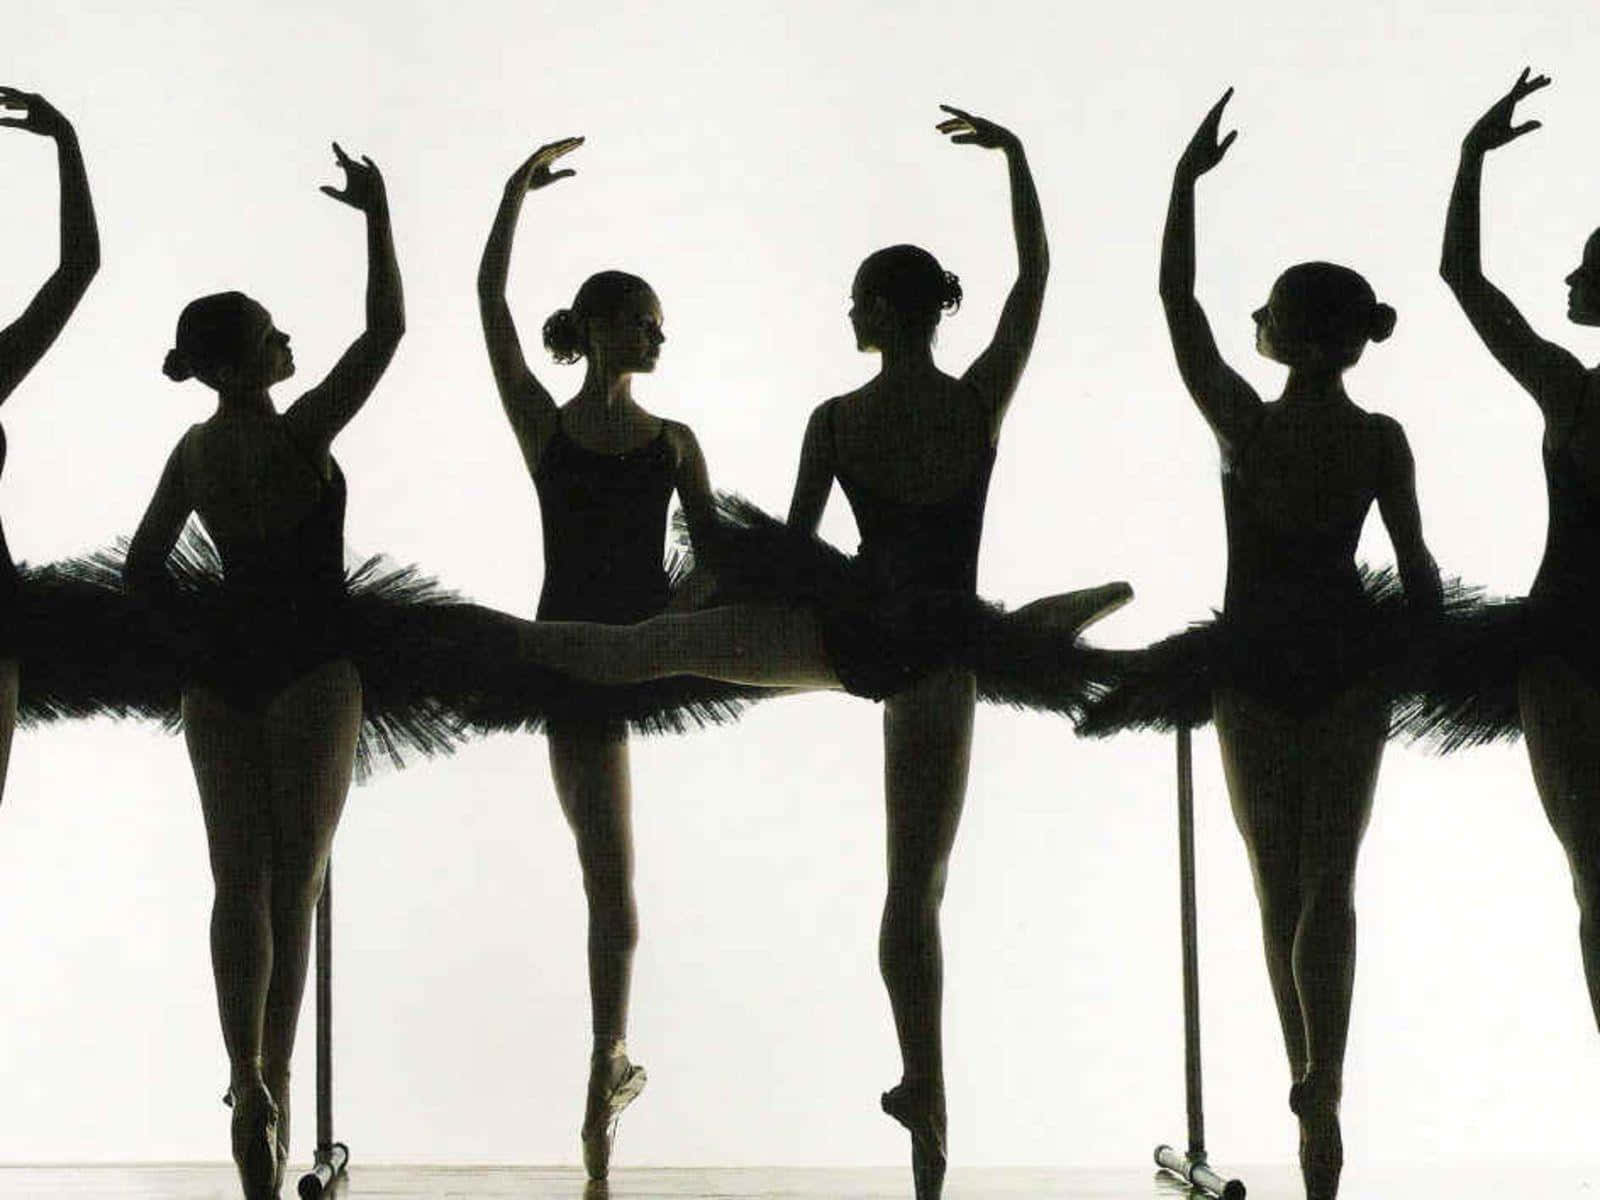 Ungrupo De Bailarines De Ballet Negros En Silueta